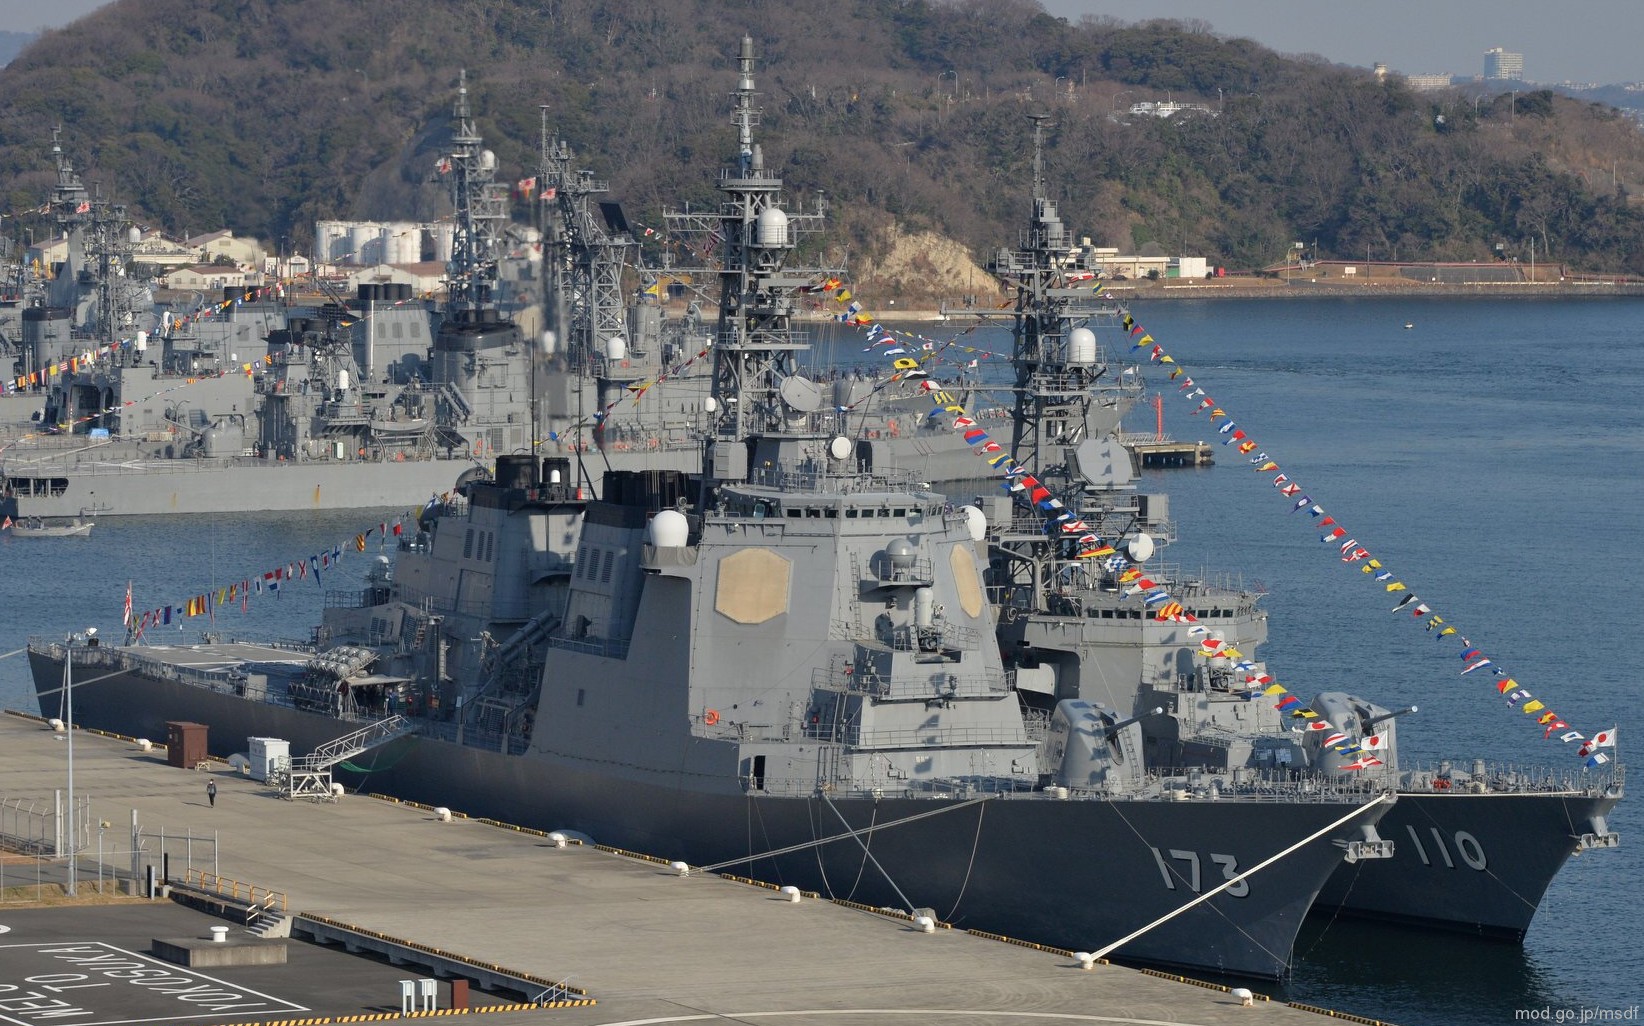 ddg-173 js kongo class guided missile destroyer aegis japan maritime self defense force jmsdf 33